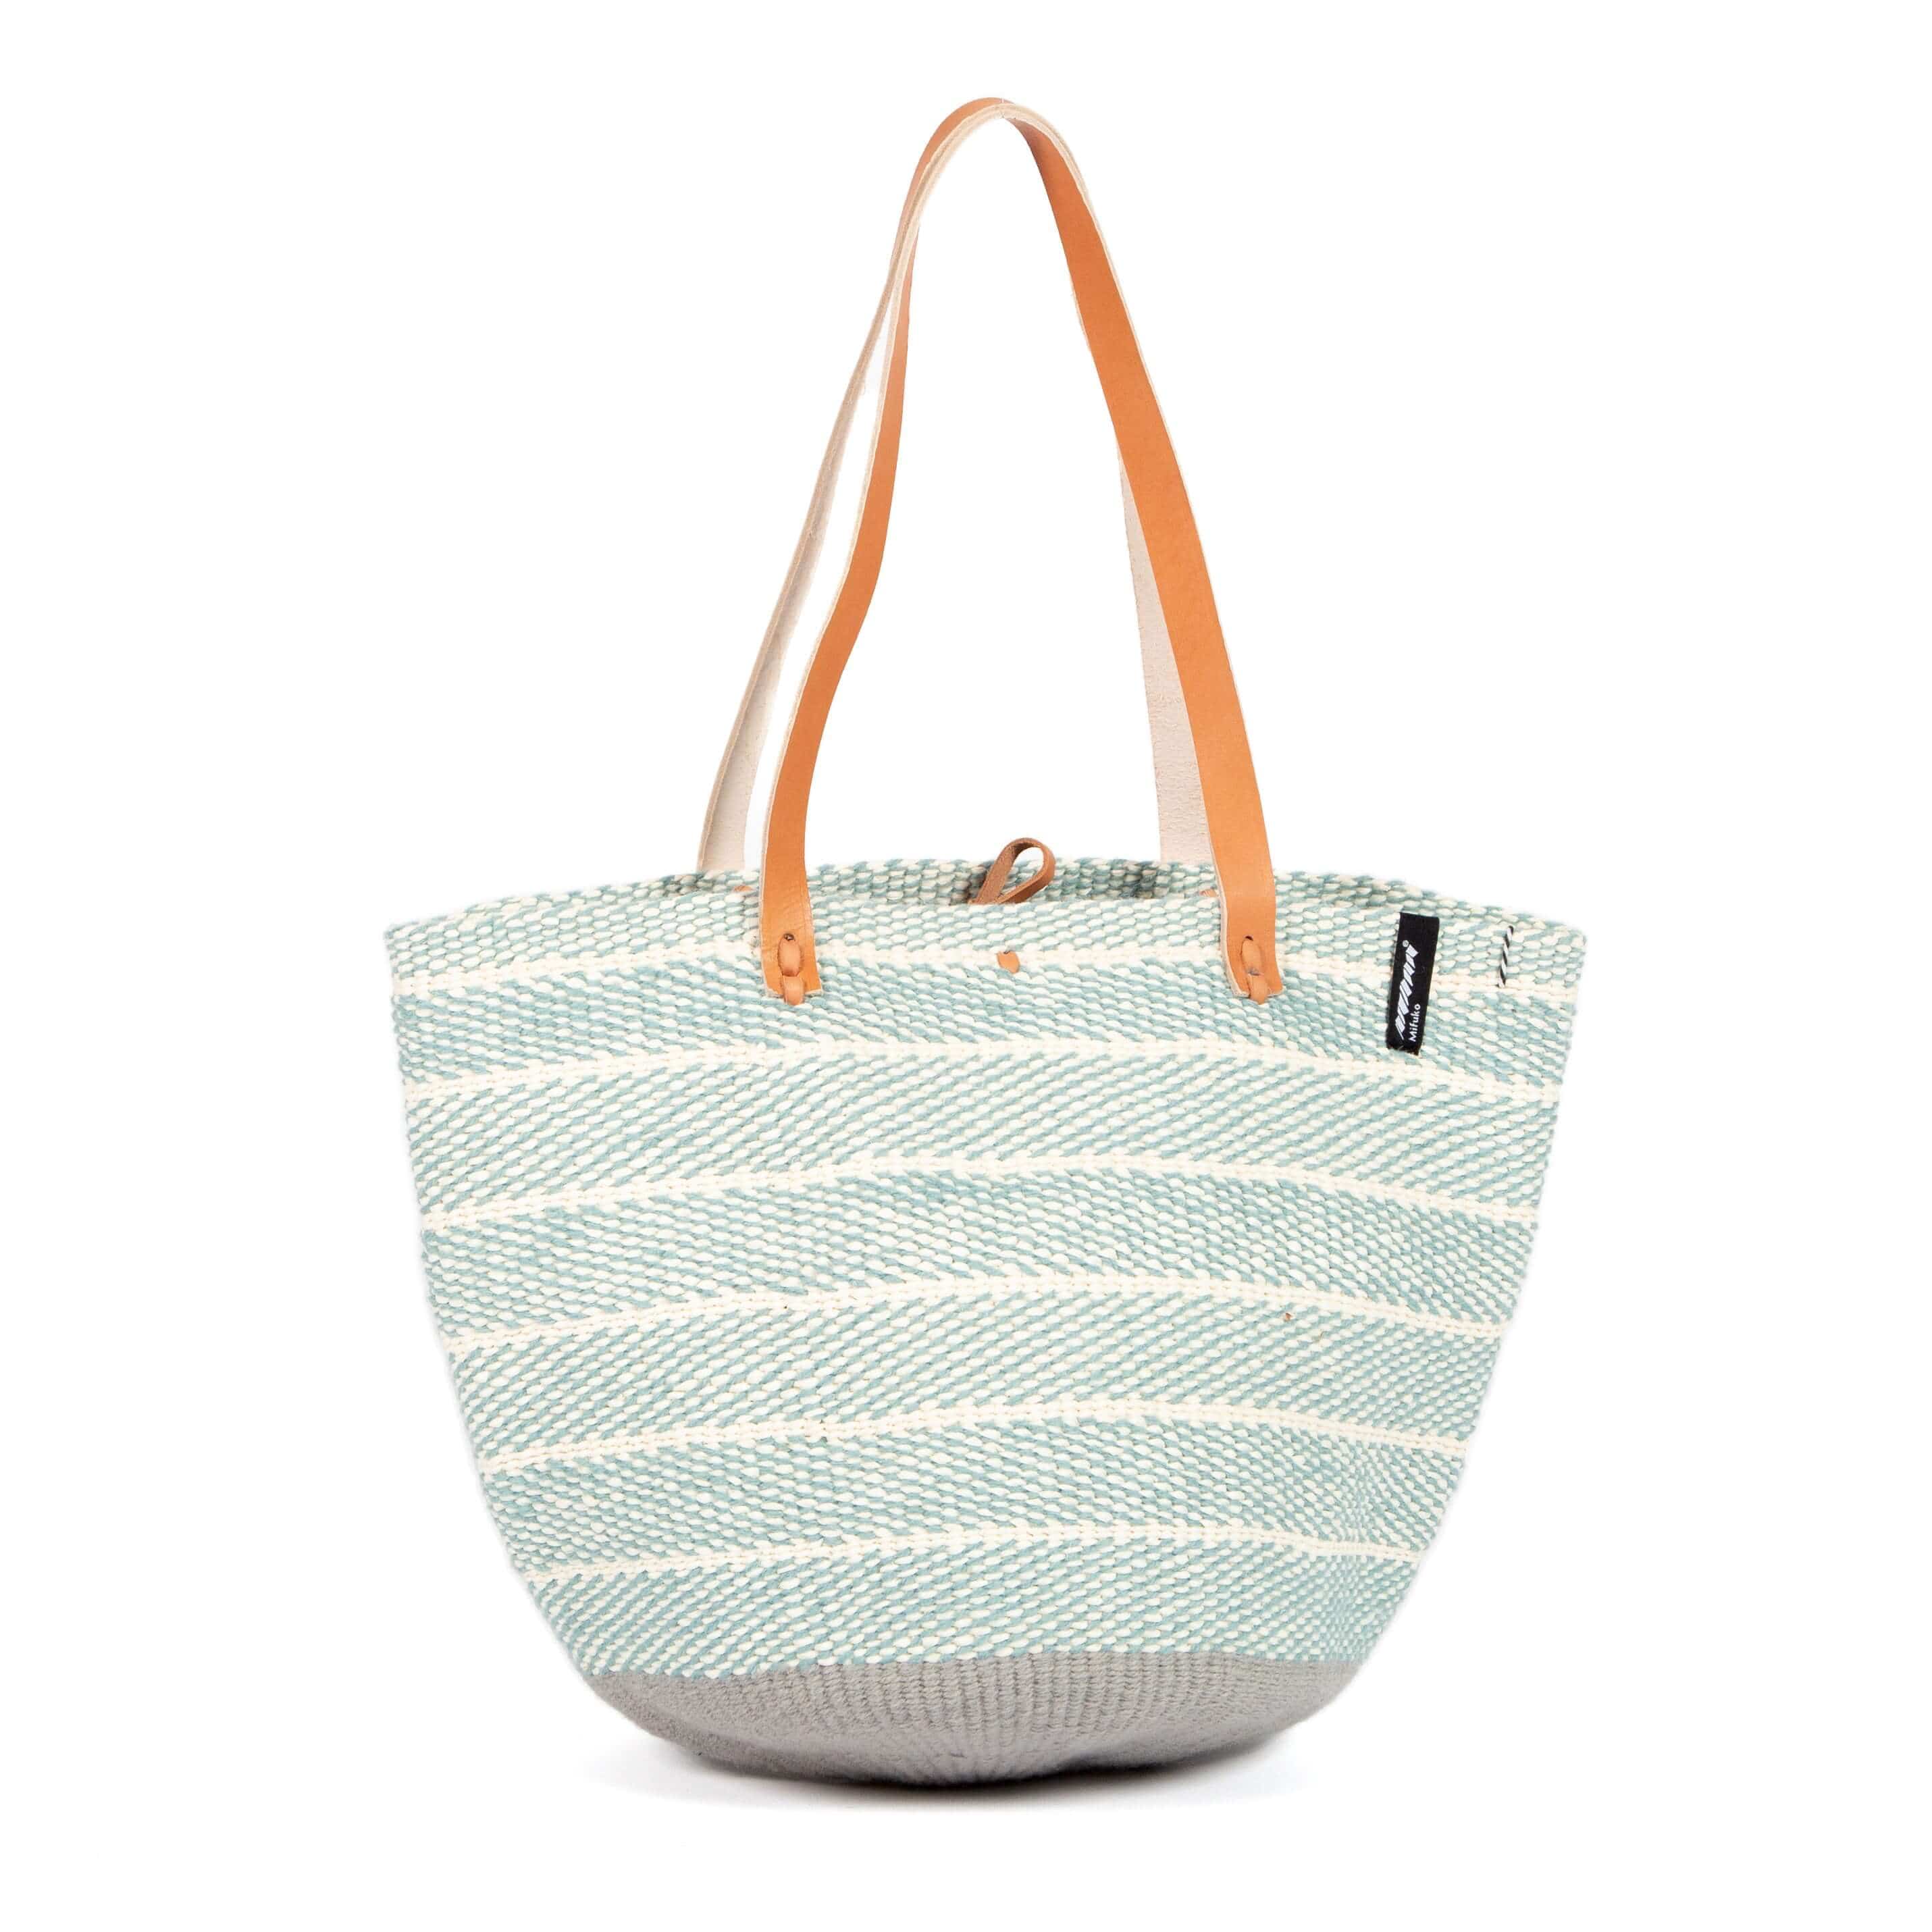 Mifuko Wool and paper Shopper basket Pamba shopper basket | Light blue twill weave M